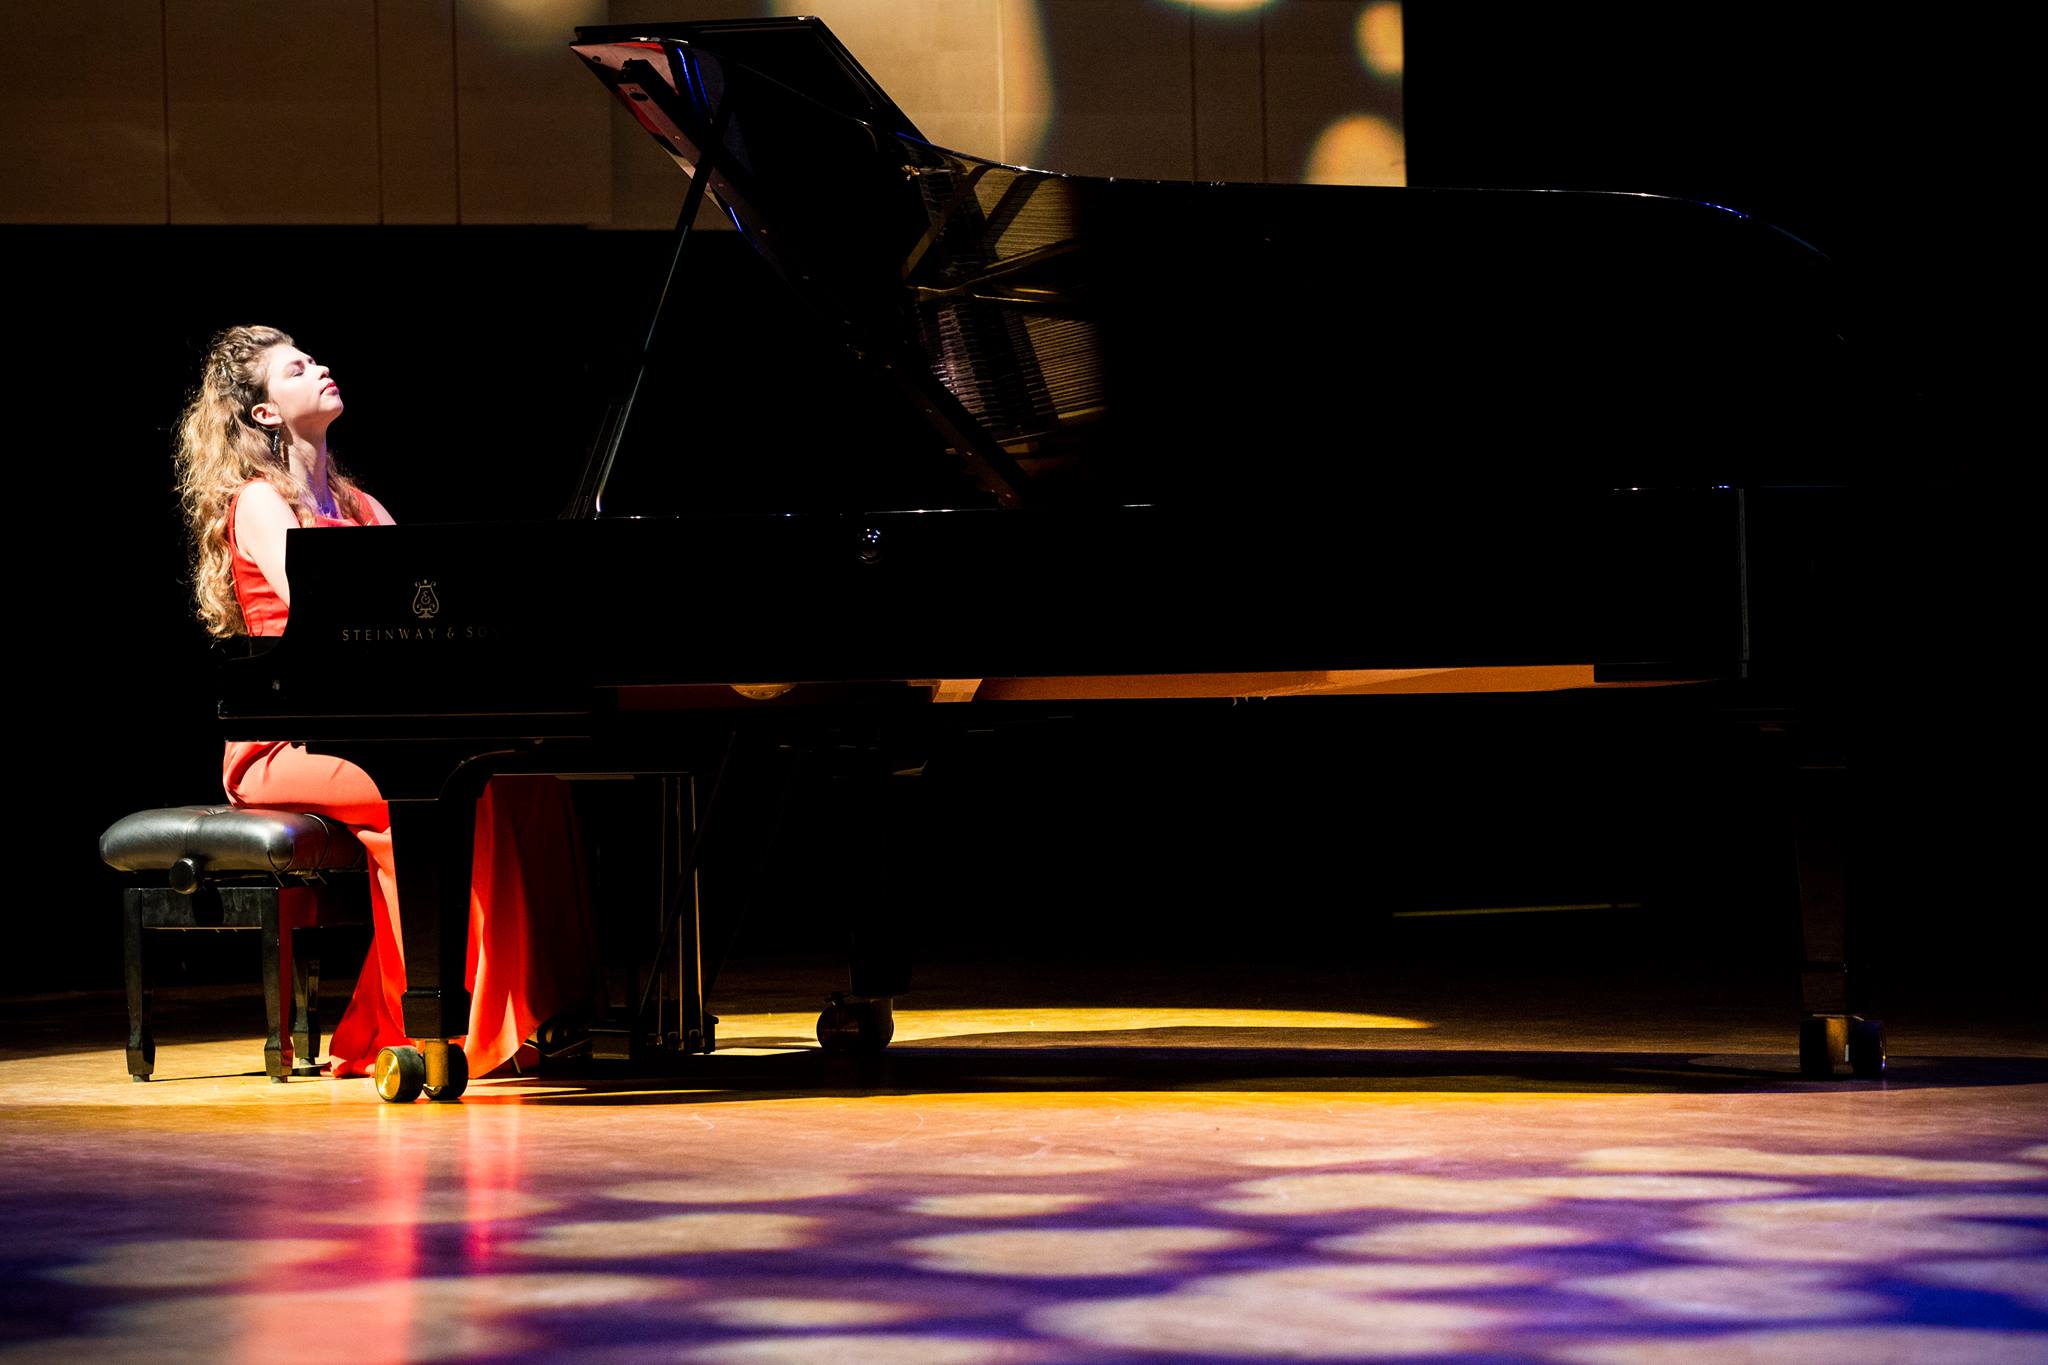 Award-winning Danish pianist performing in China 12-15 December